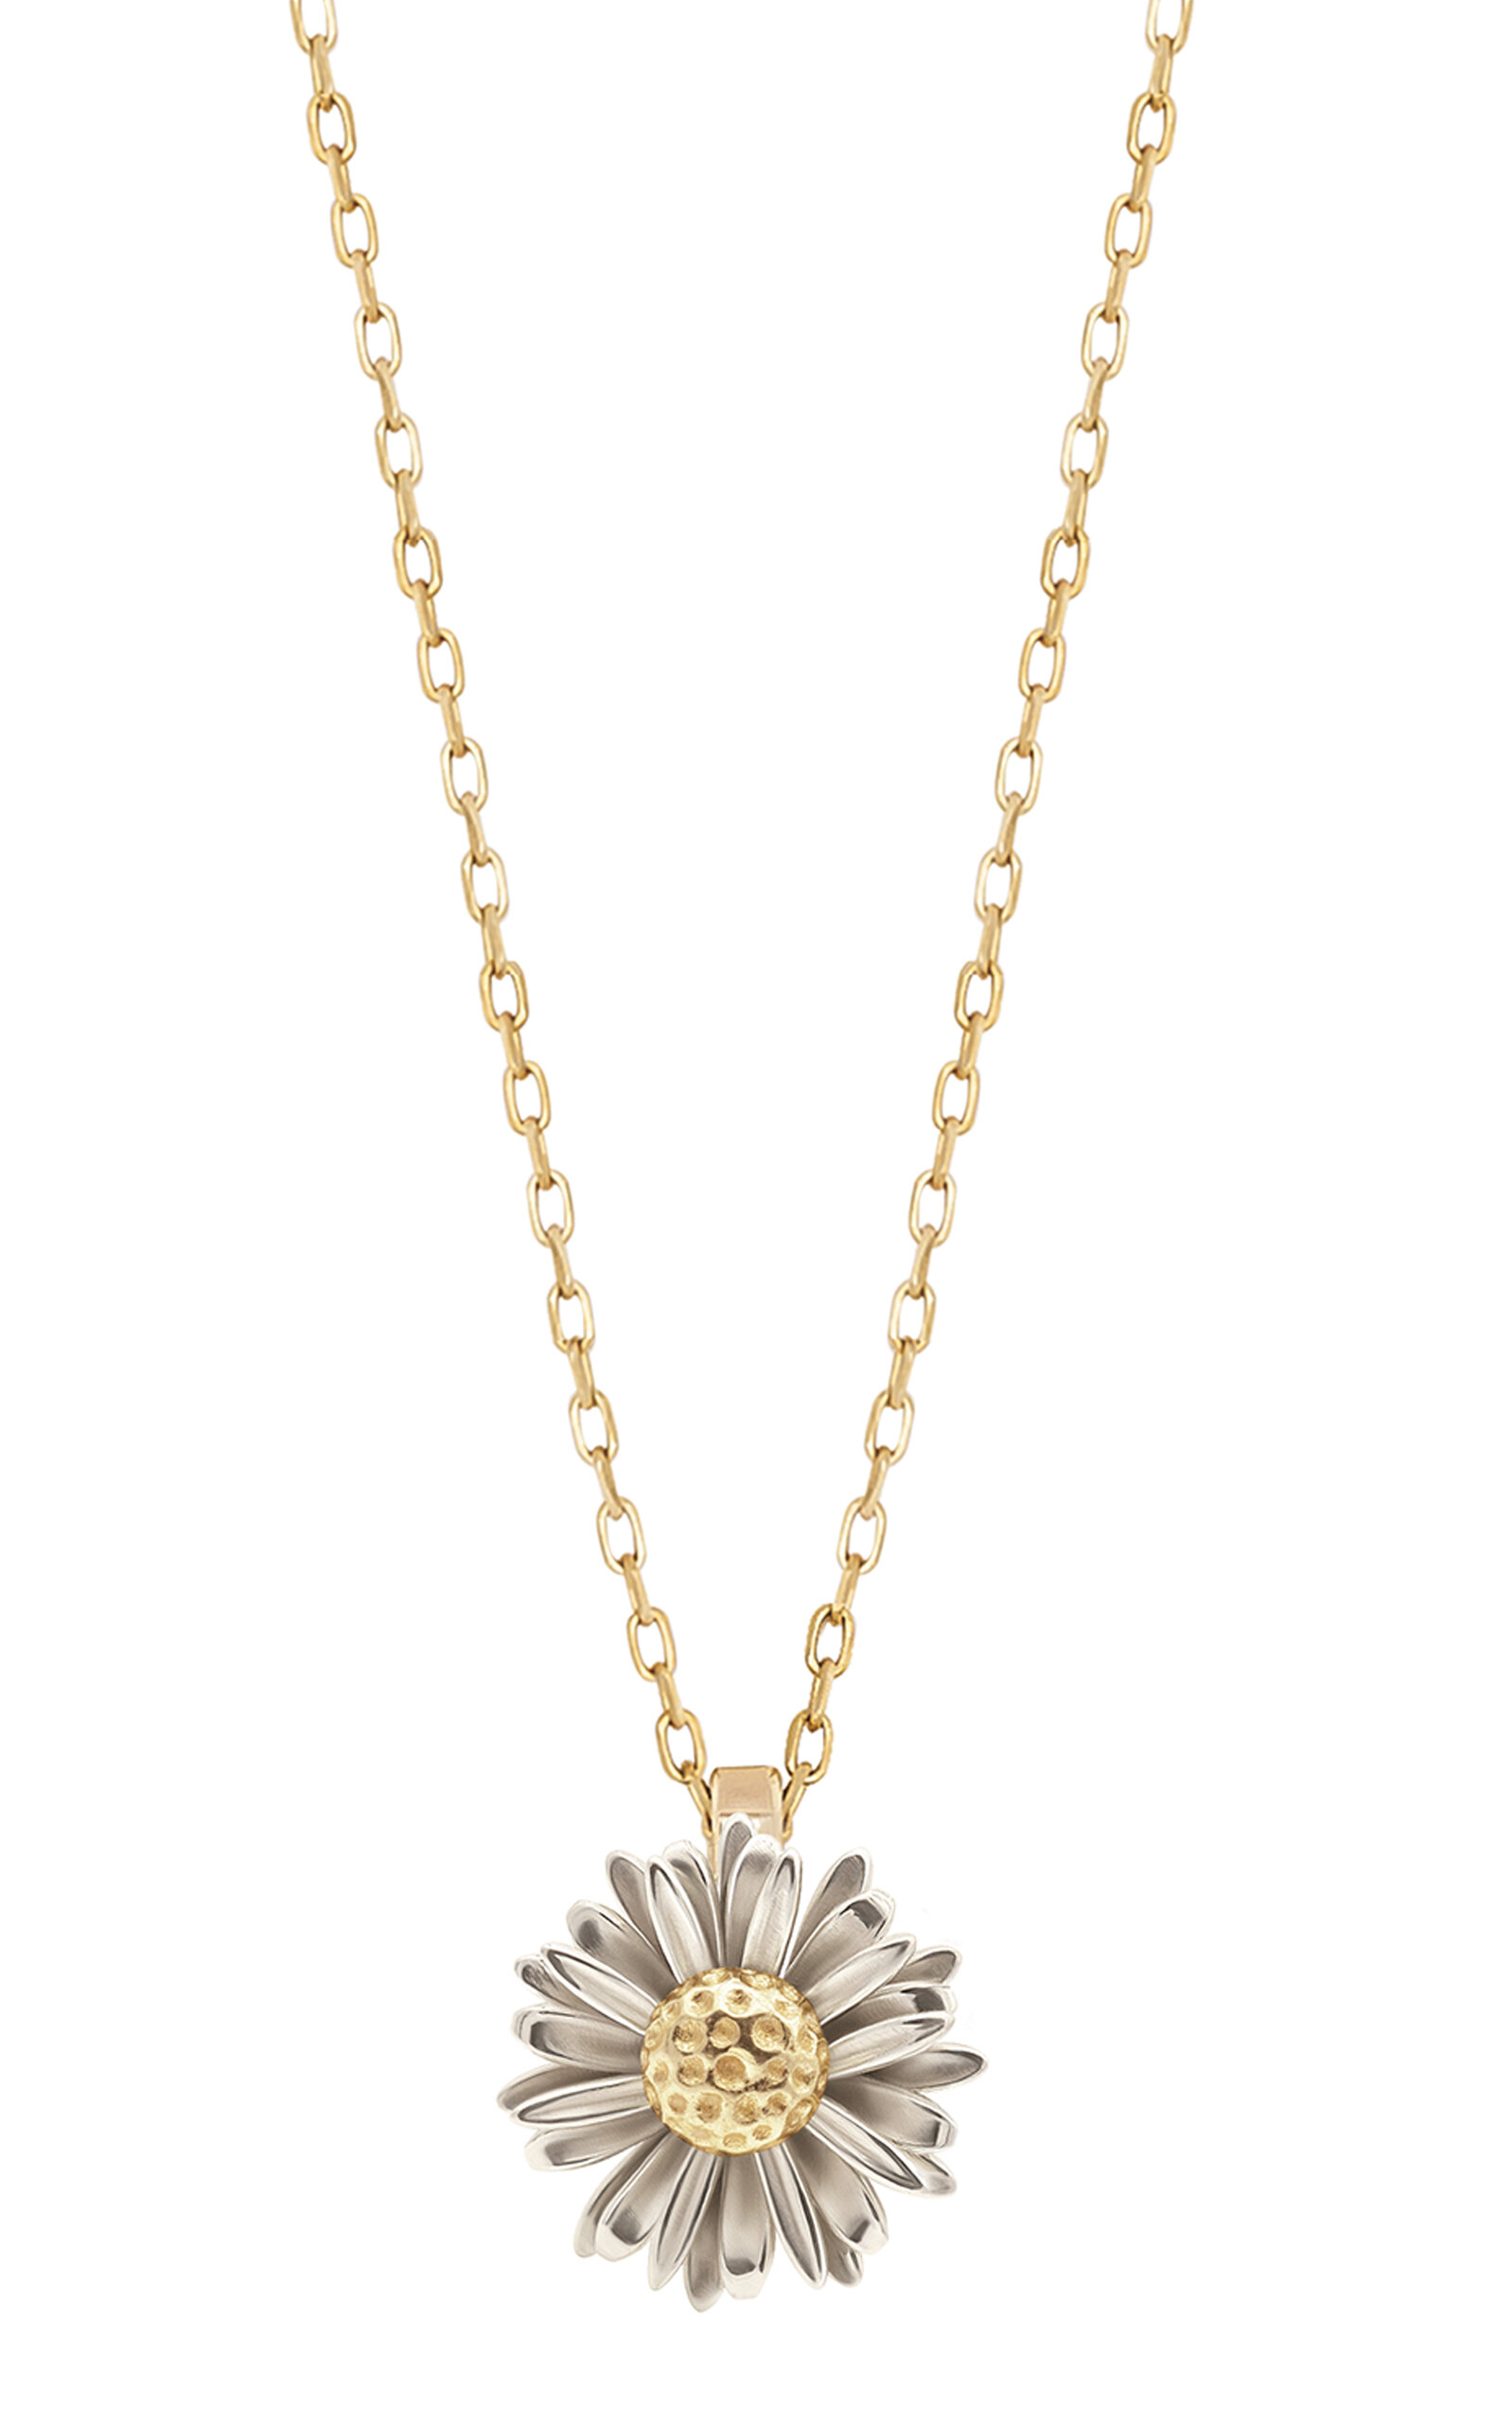 Bernard James Women's Flora Maxi 14K Yellow and White Gold Necklace